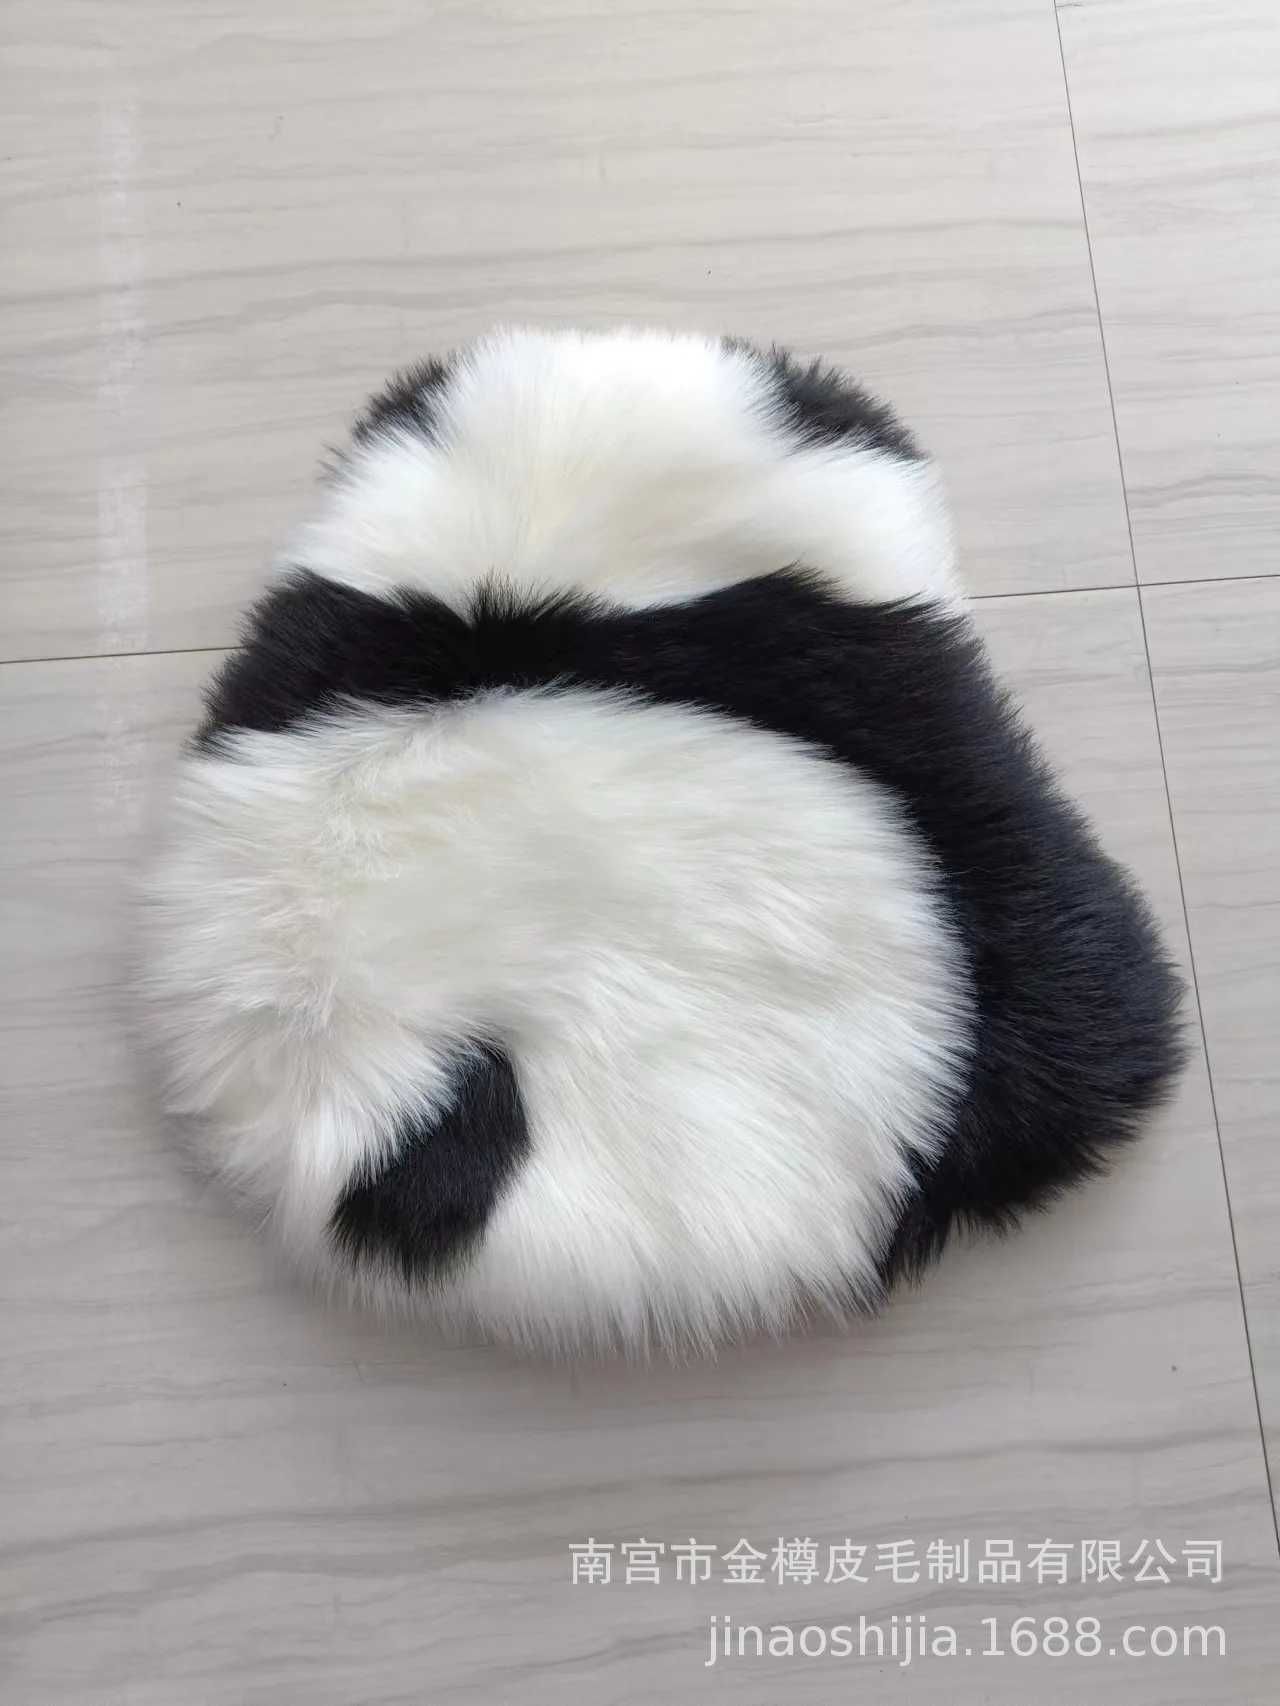 Plexh Panda-50x50cm